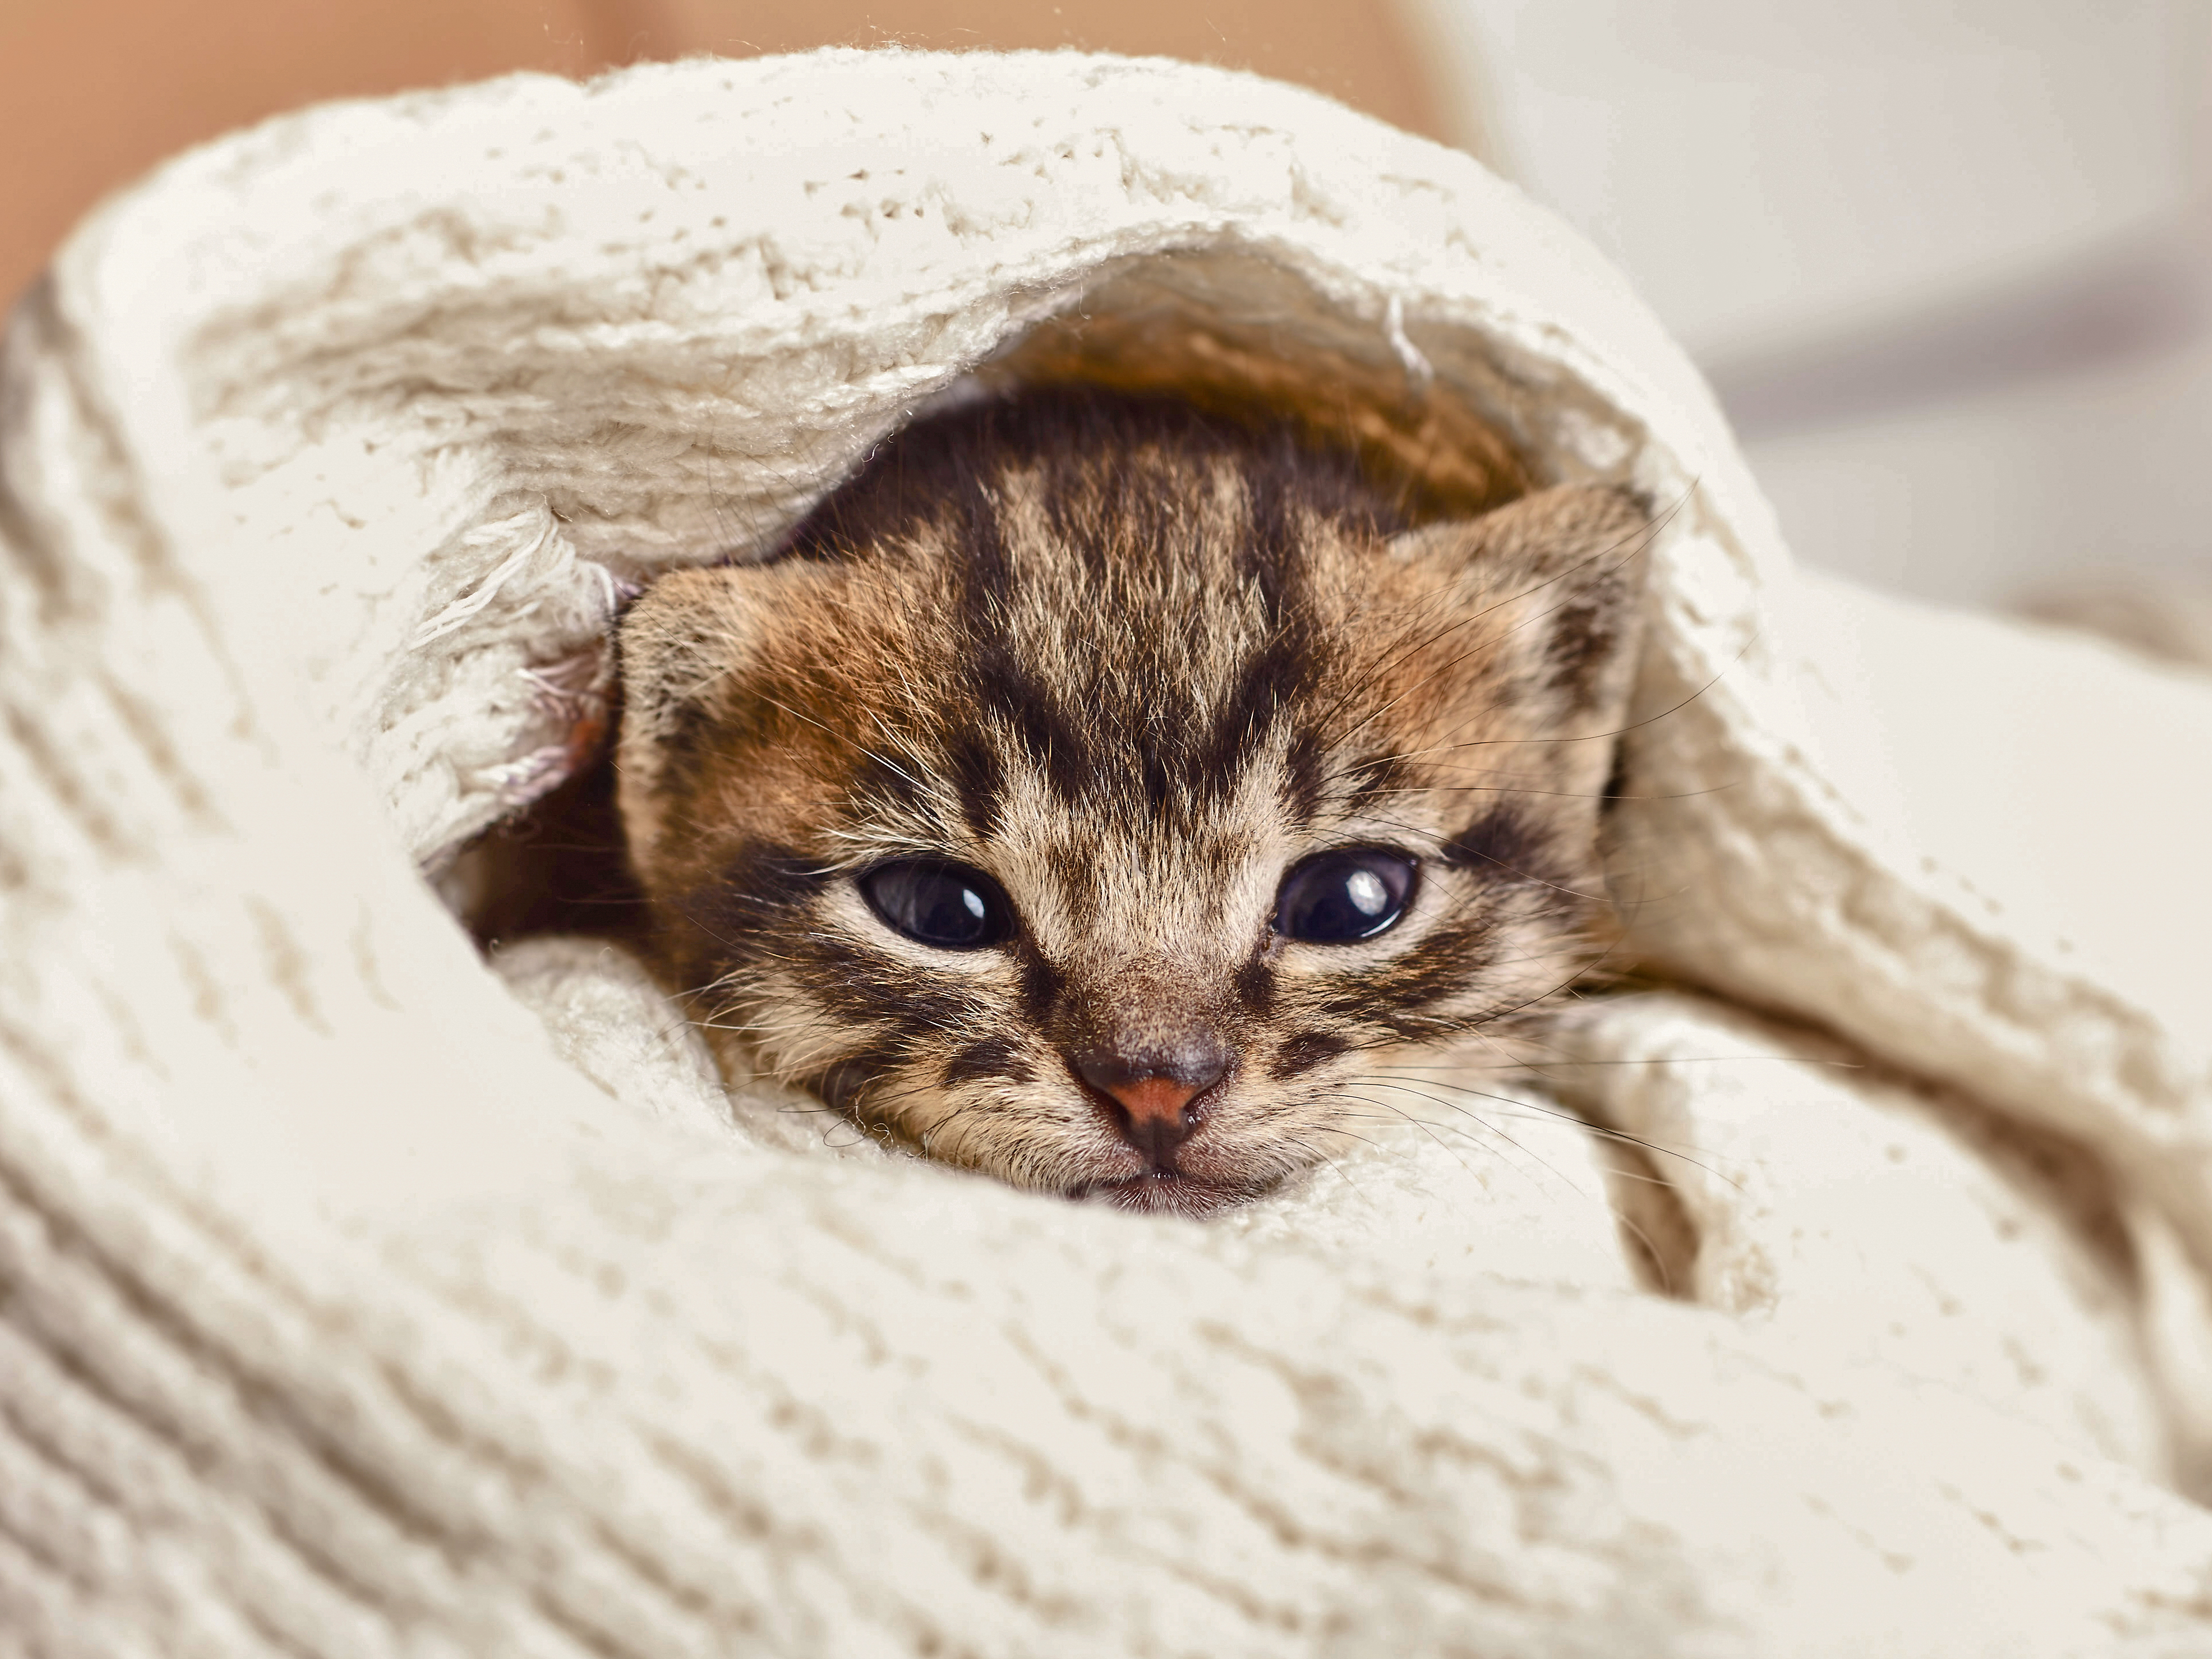 Kitten wrapped in a white blanket